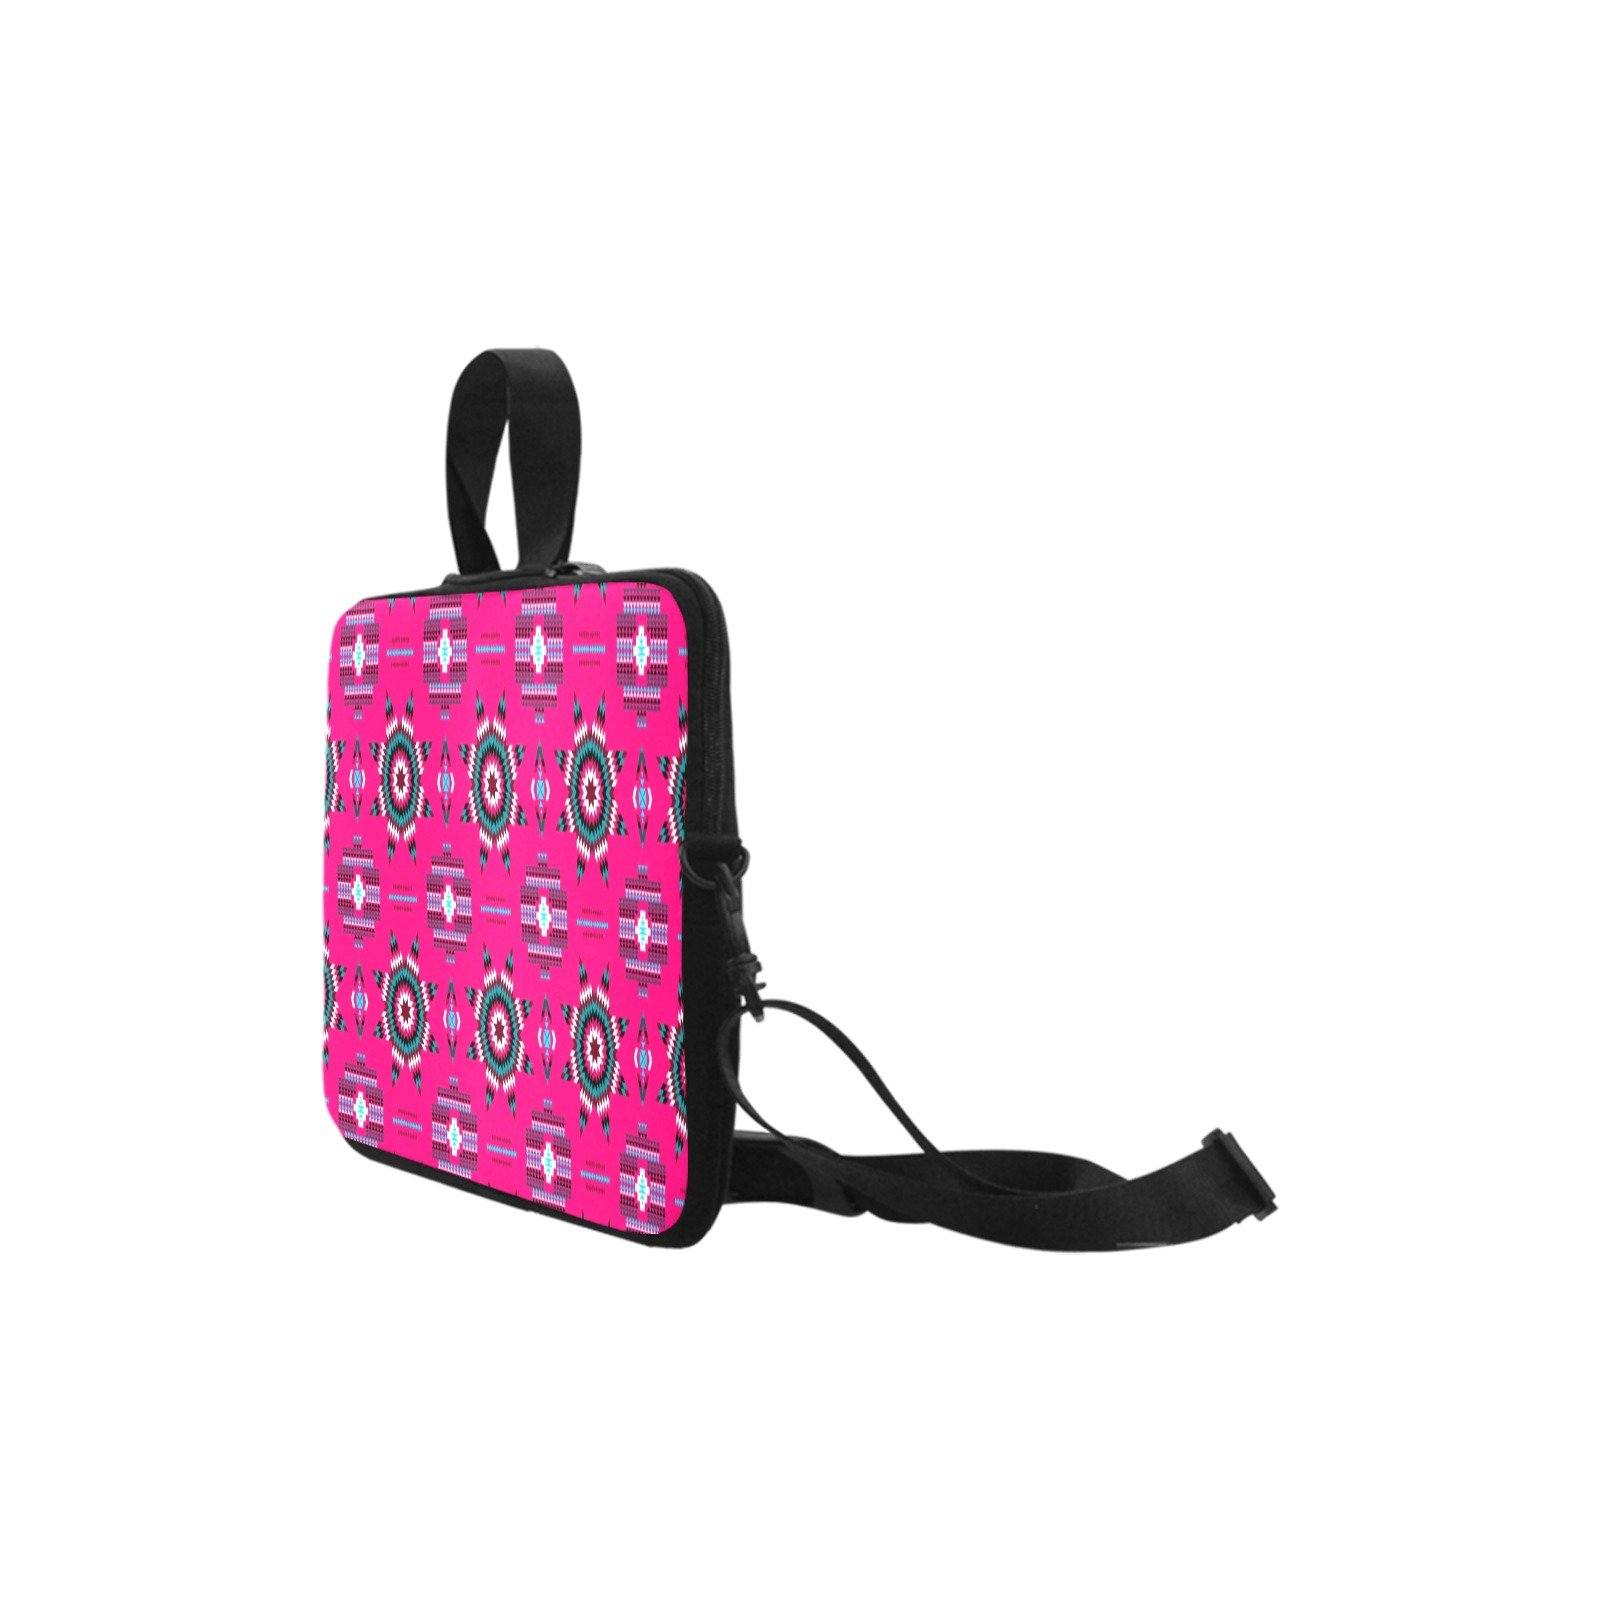 Rising Star Strawberry Moon Laptop Handbags 13" Laptop Handbags 13" e-joyer 